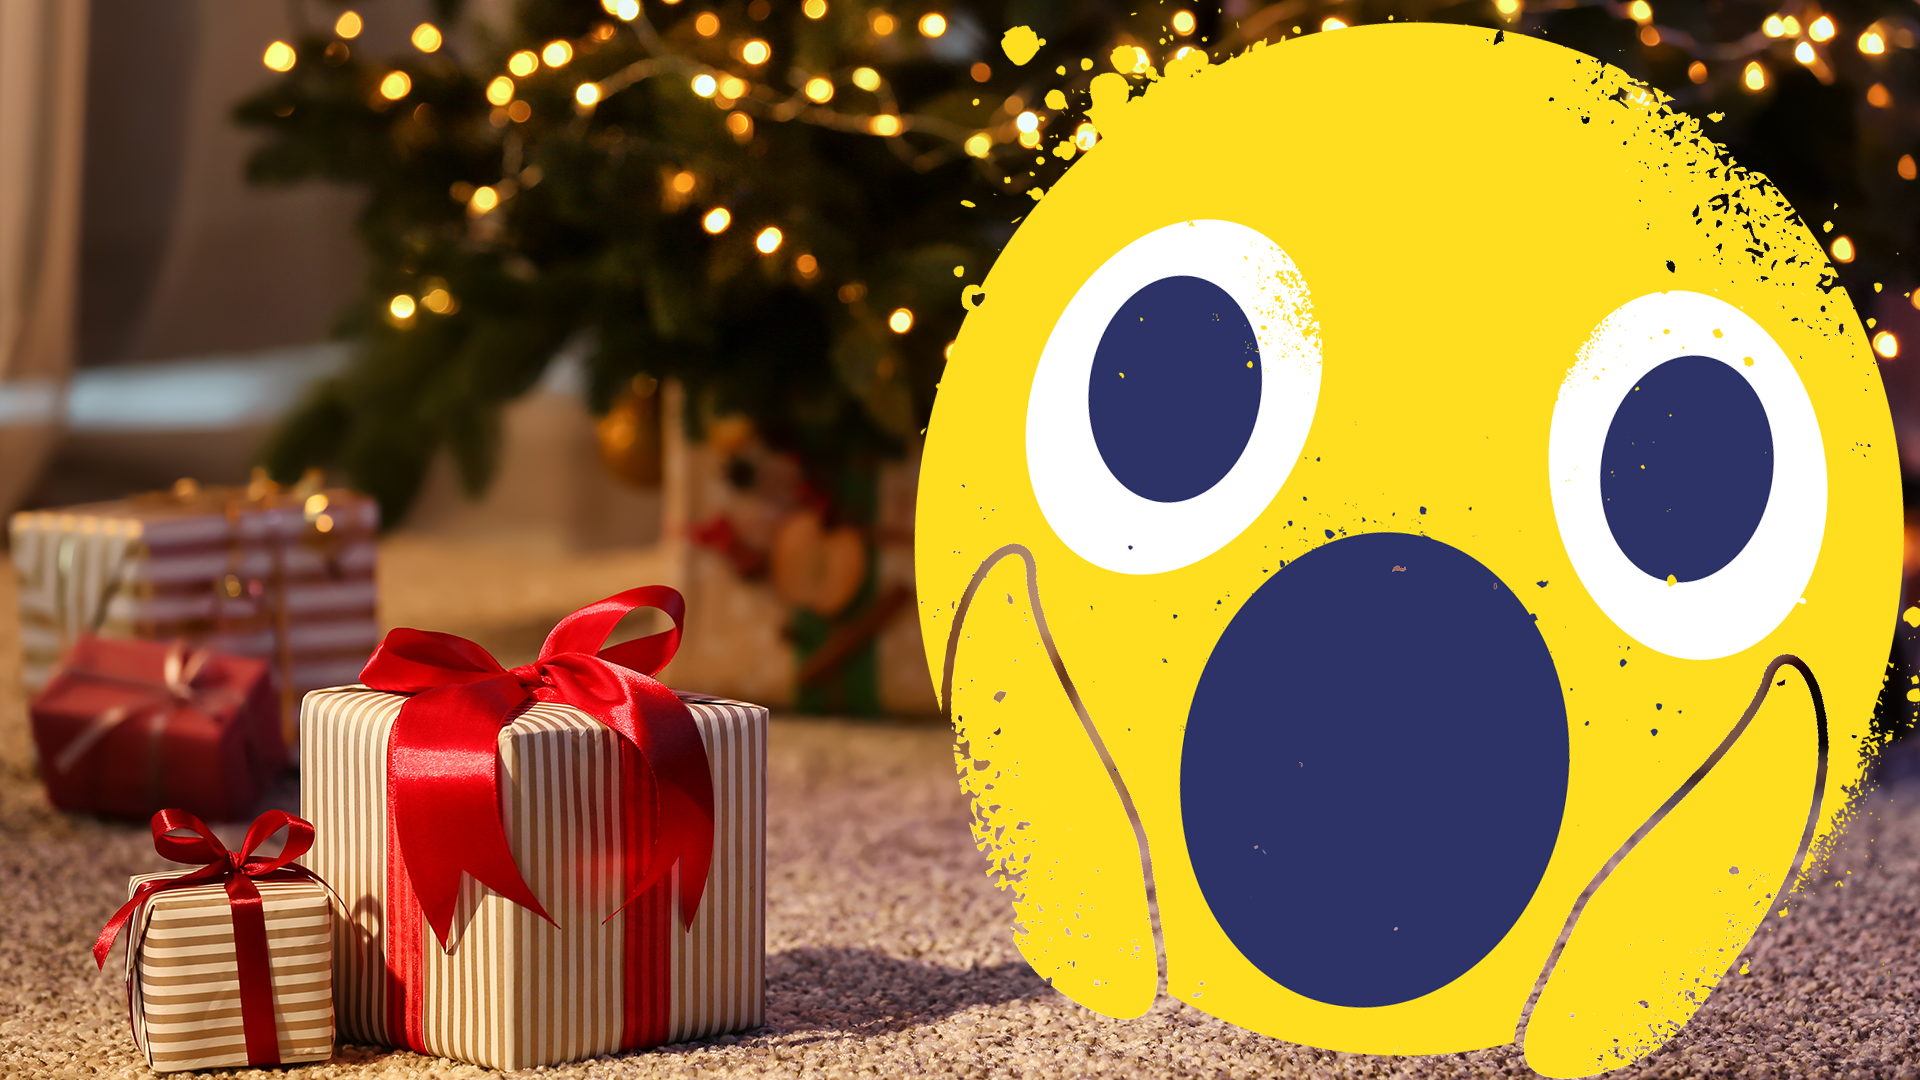 Shocked emoji in a Christmas scene